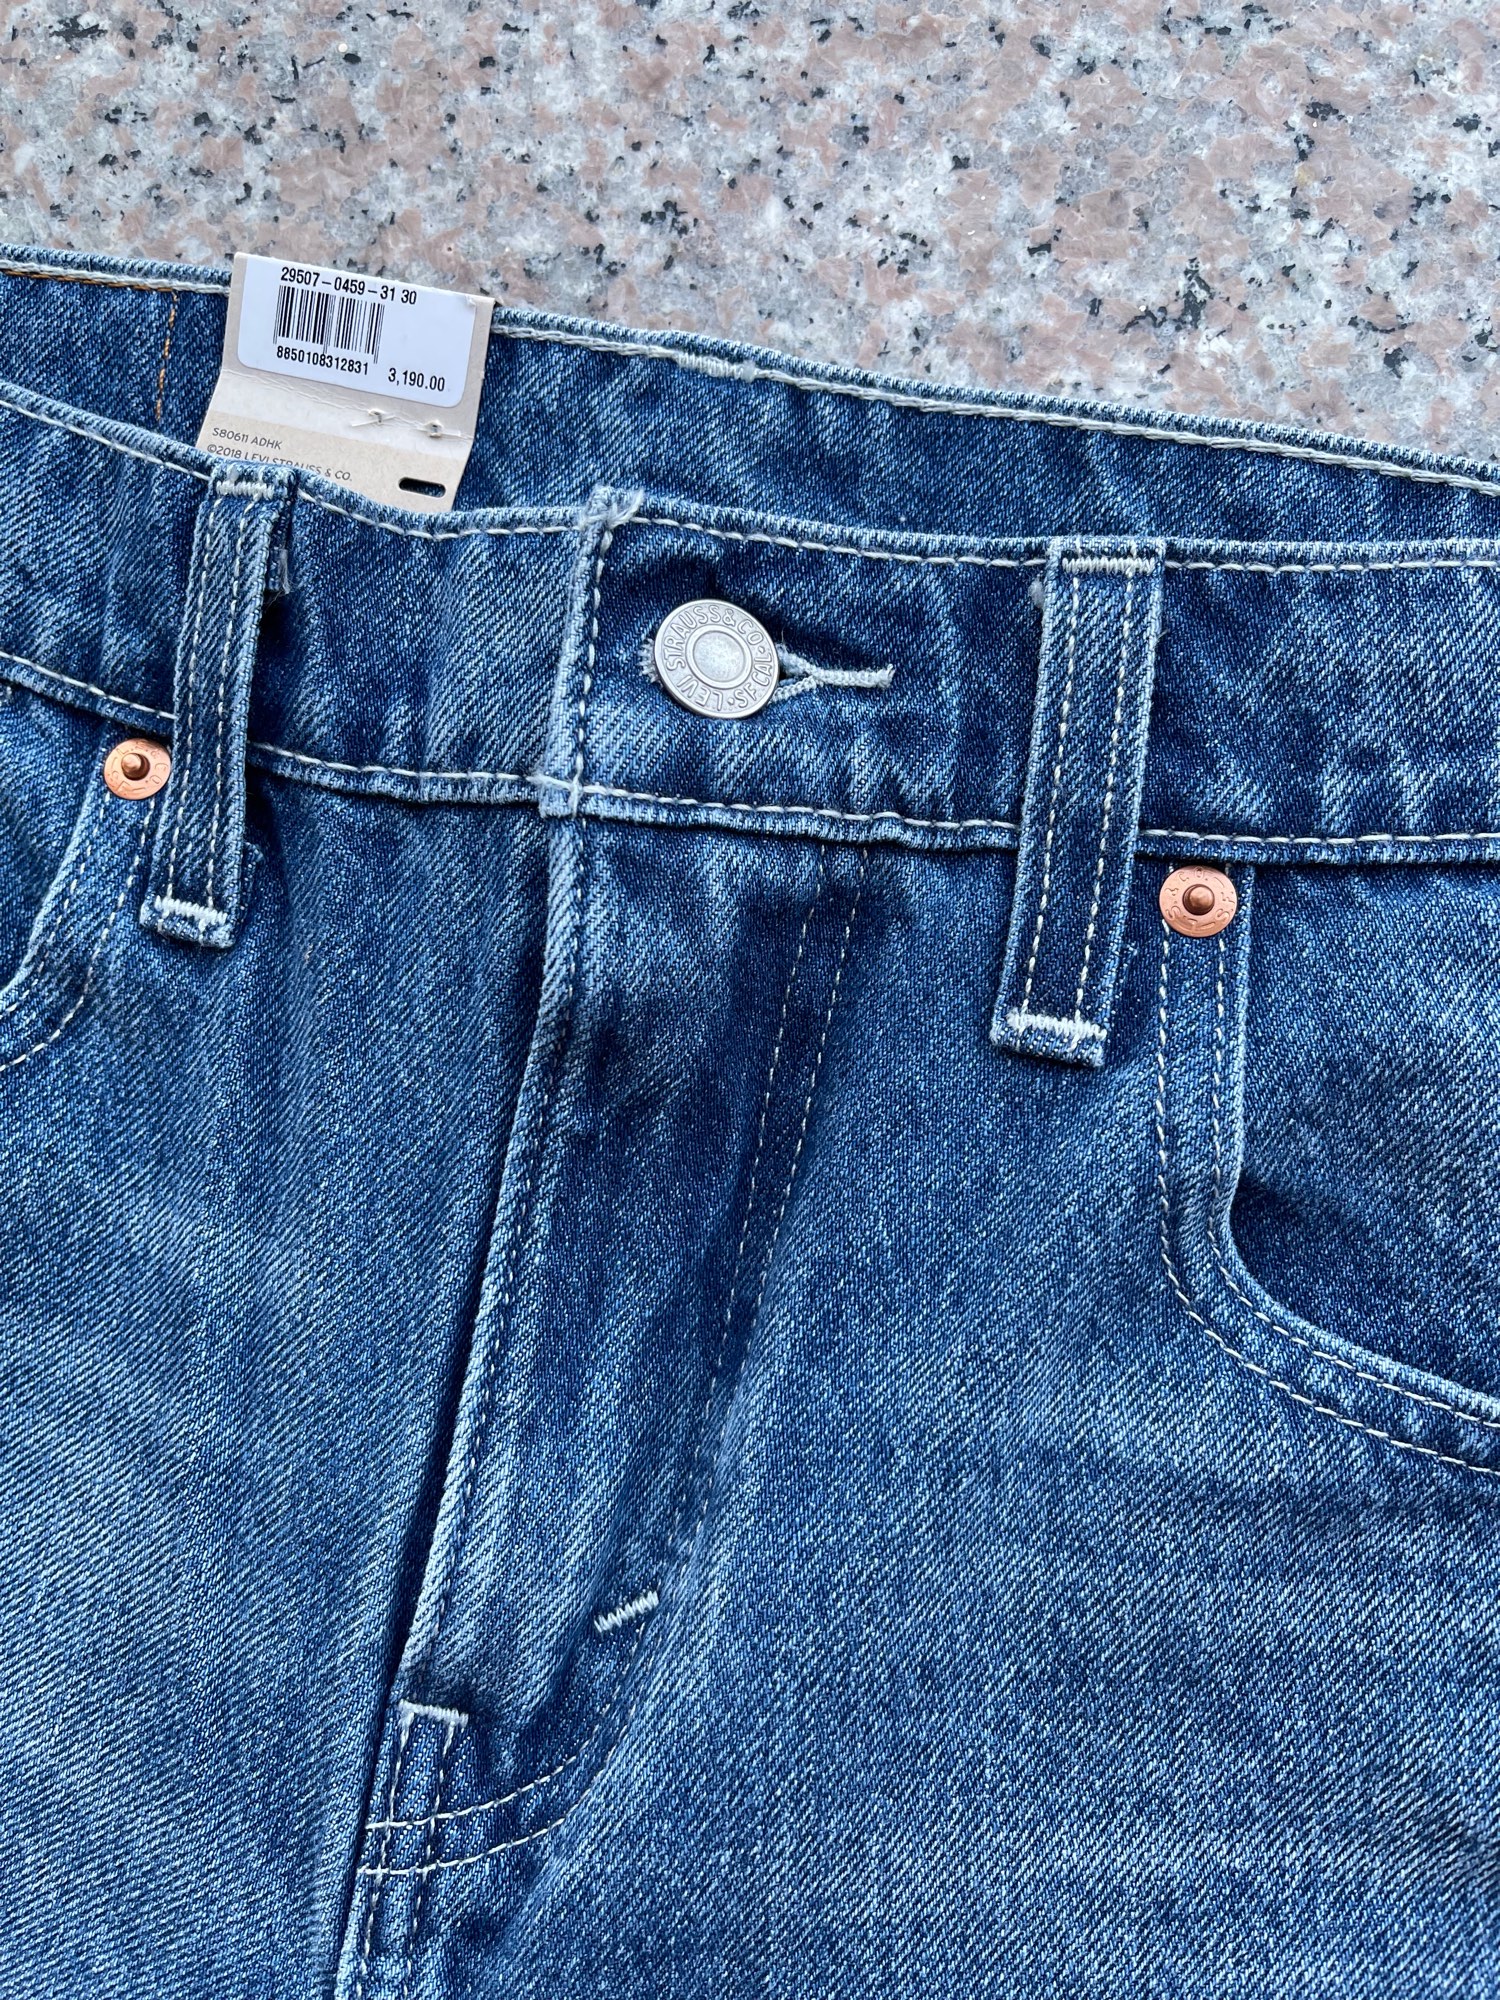 Levi's Women's Classic Straight Jeans - Moonlight